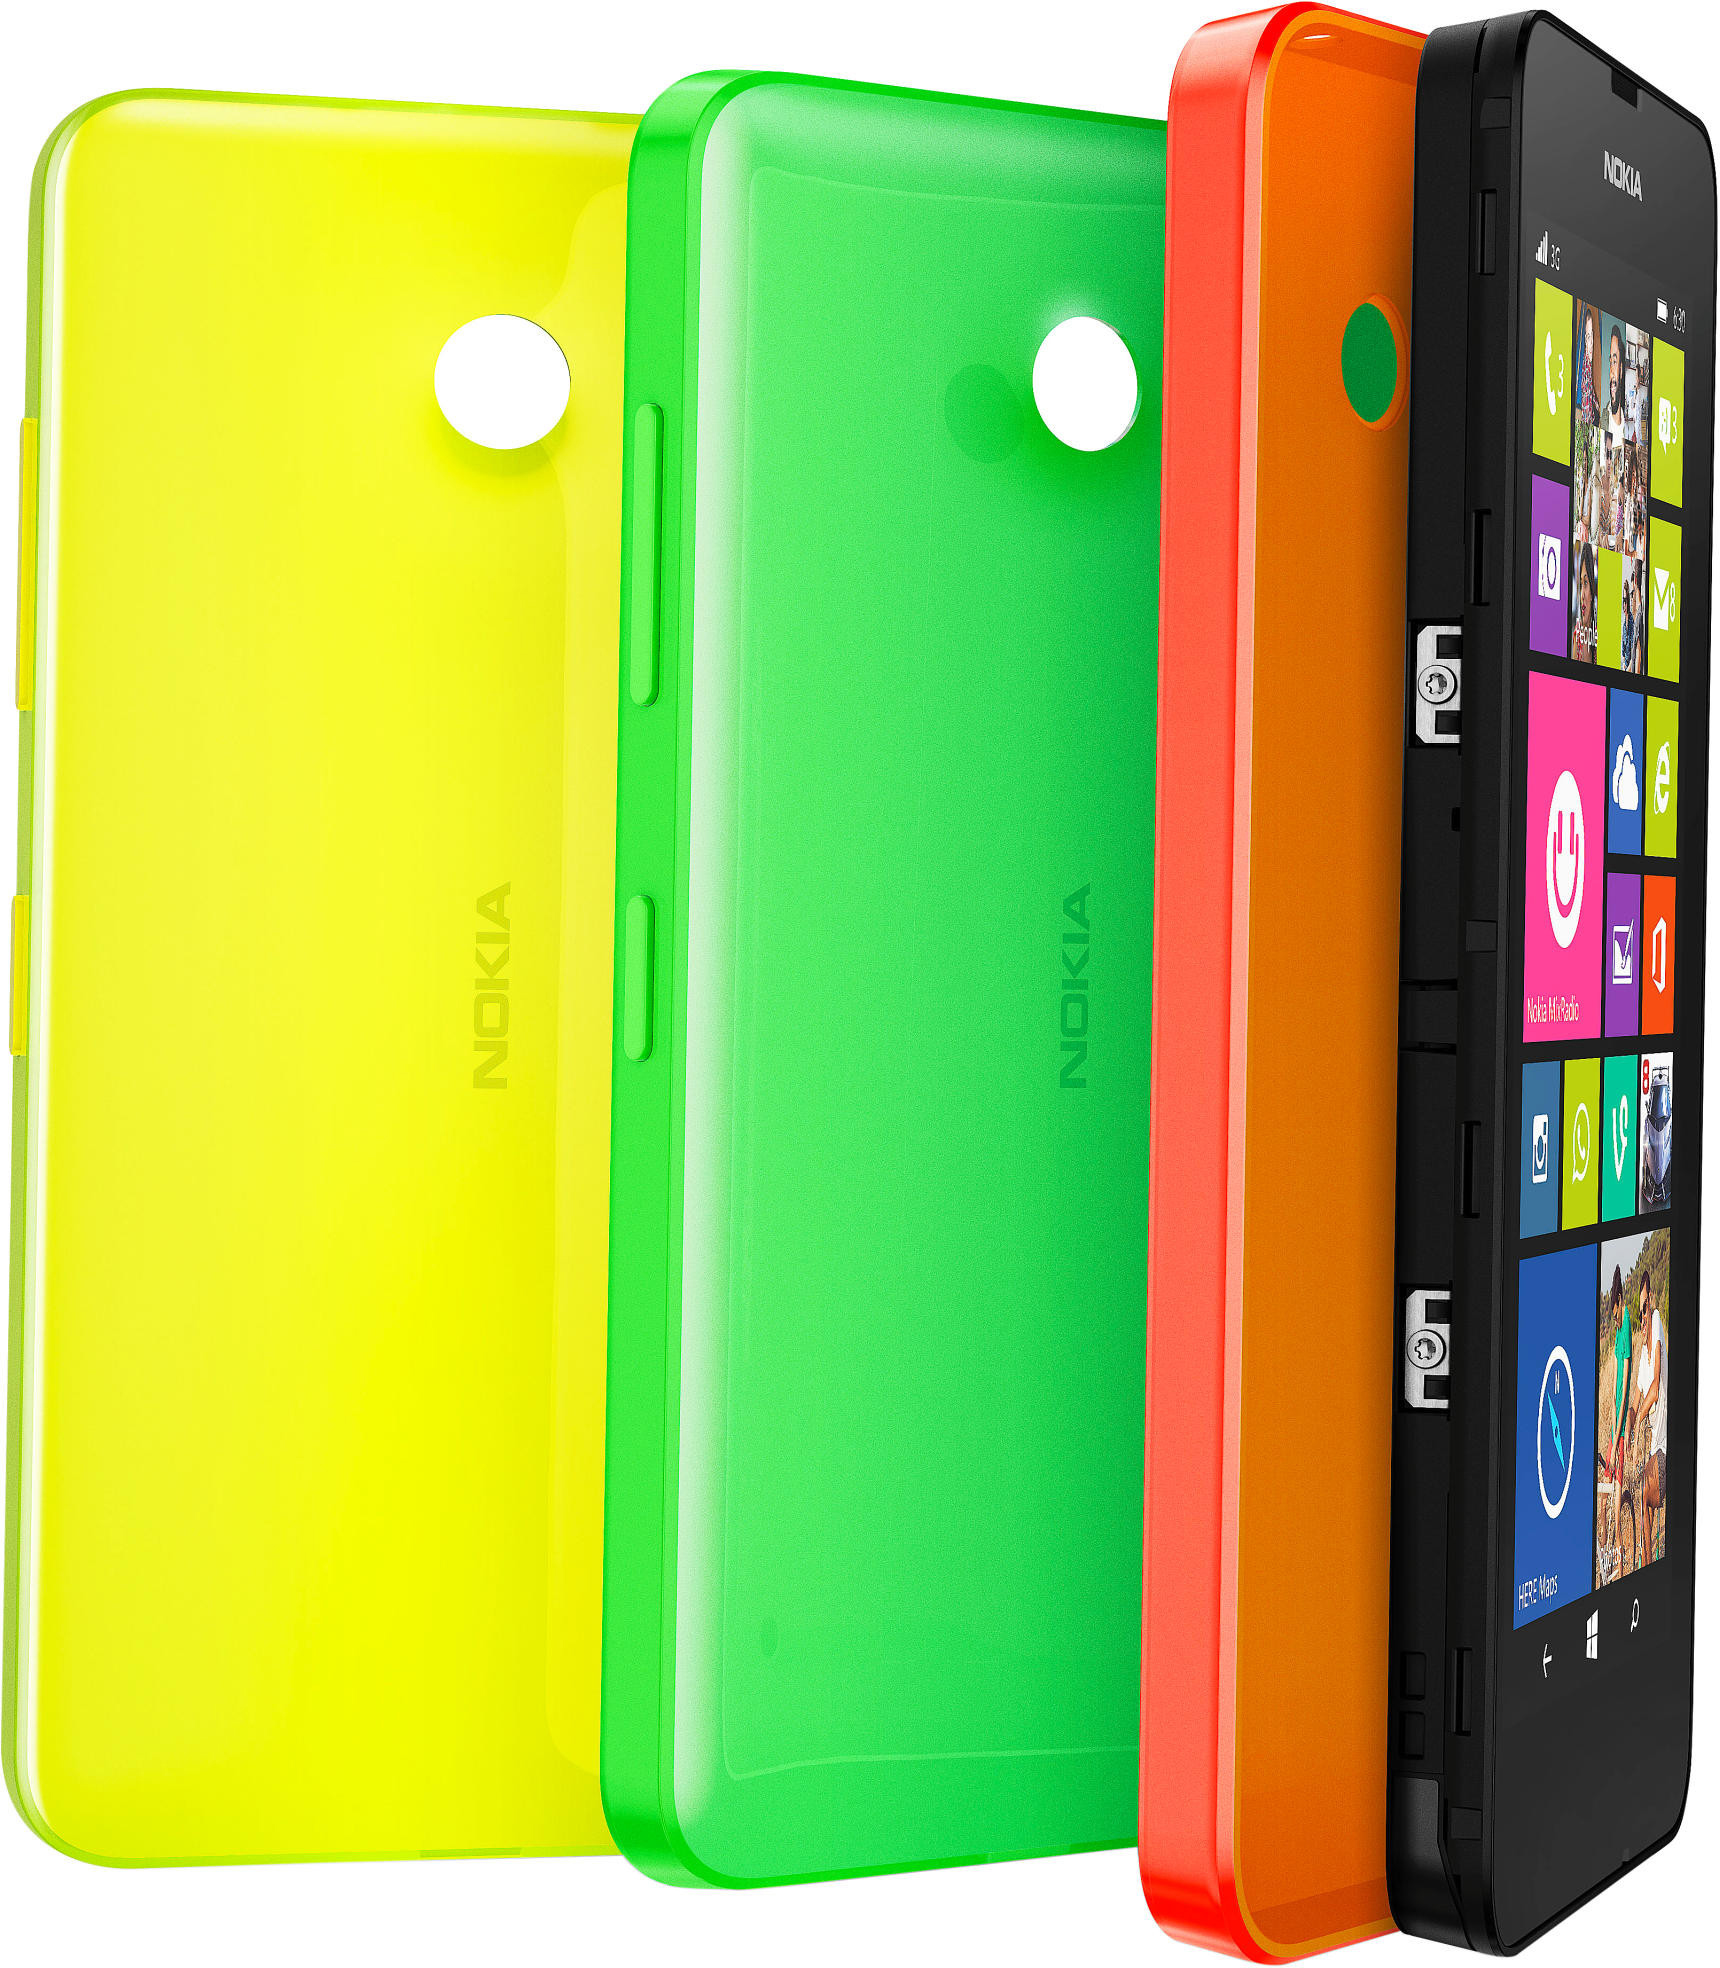 Backcover, CC 630, Lumia Shell, 3079 Lumia NOKIA Nokia, Grün 635,